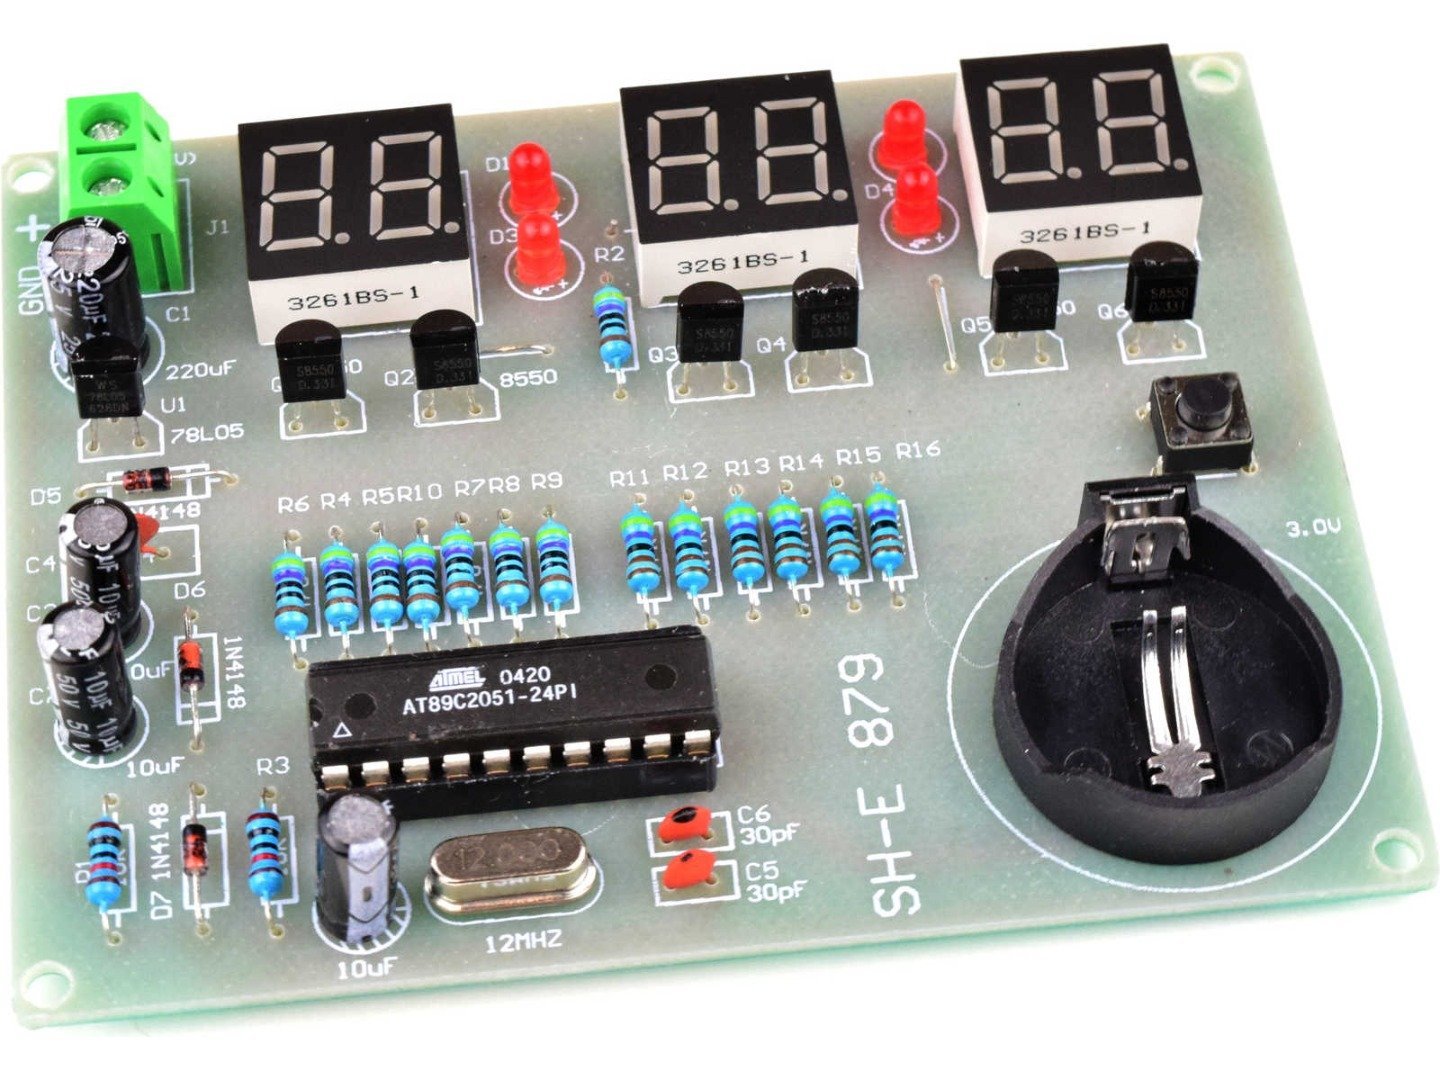 Digital LED Clock 6-Digit, DIY kit based on AT89C2051 7